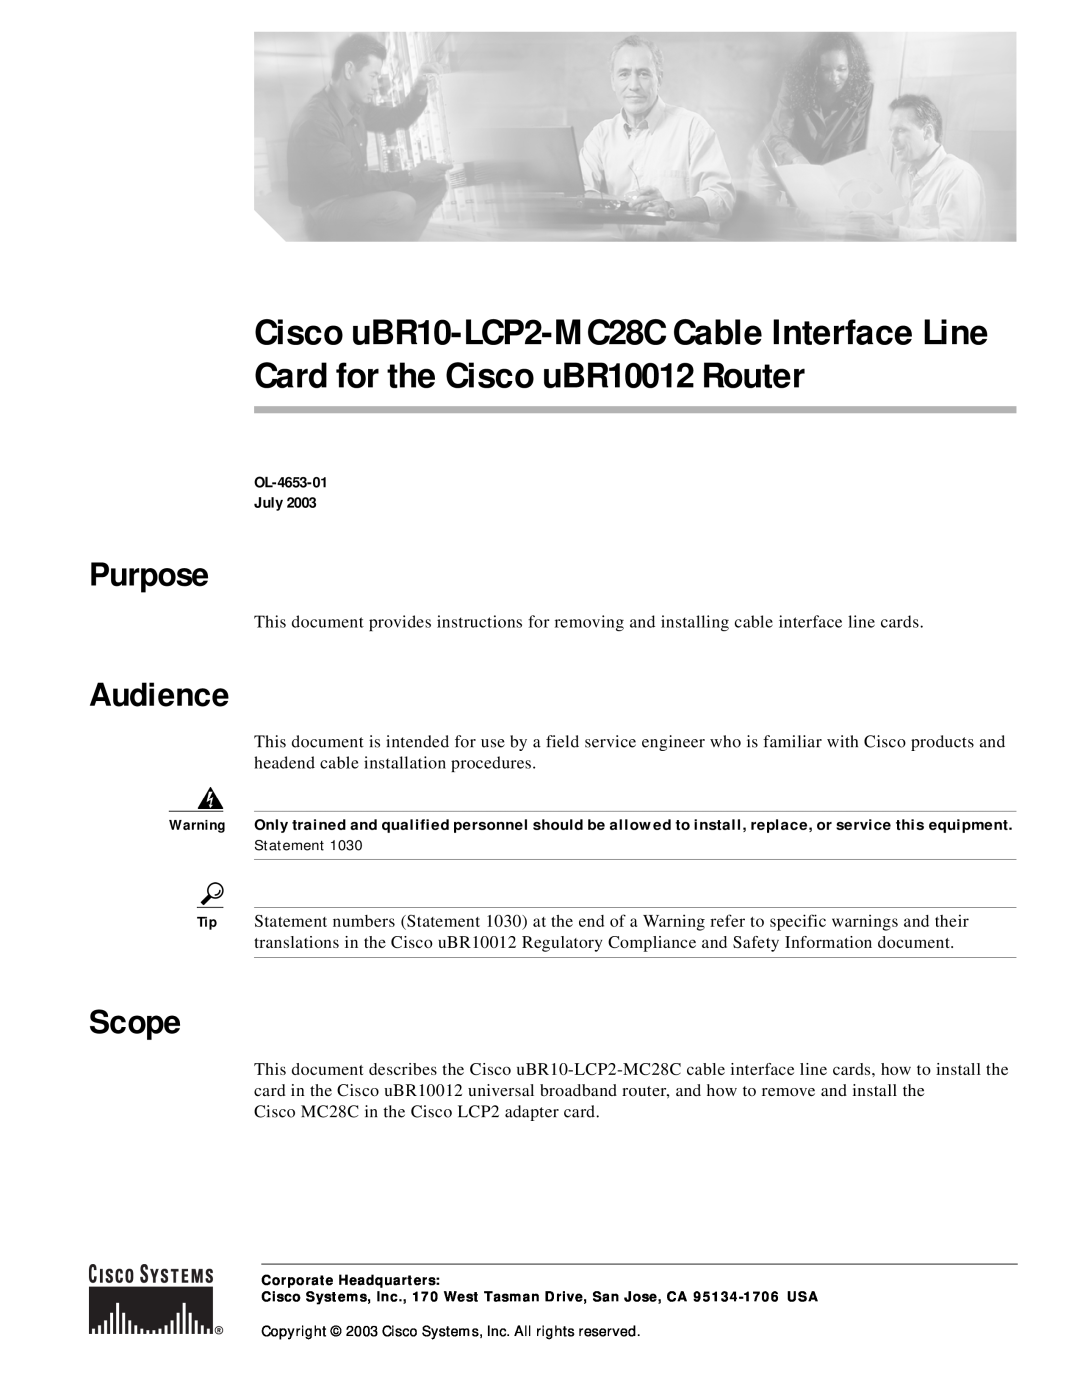 Cisco Systems uBR10-LCP2-MC28C manual Purpose, Audience, Scope, OL-4653-01 July 